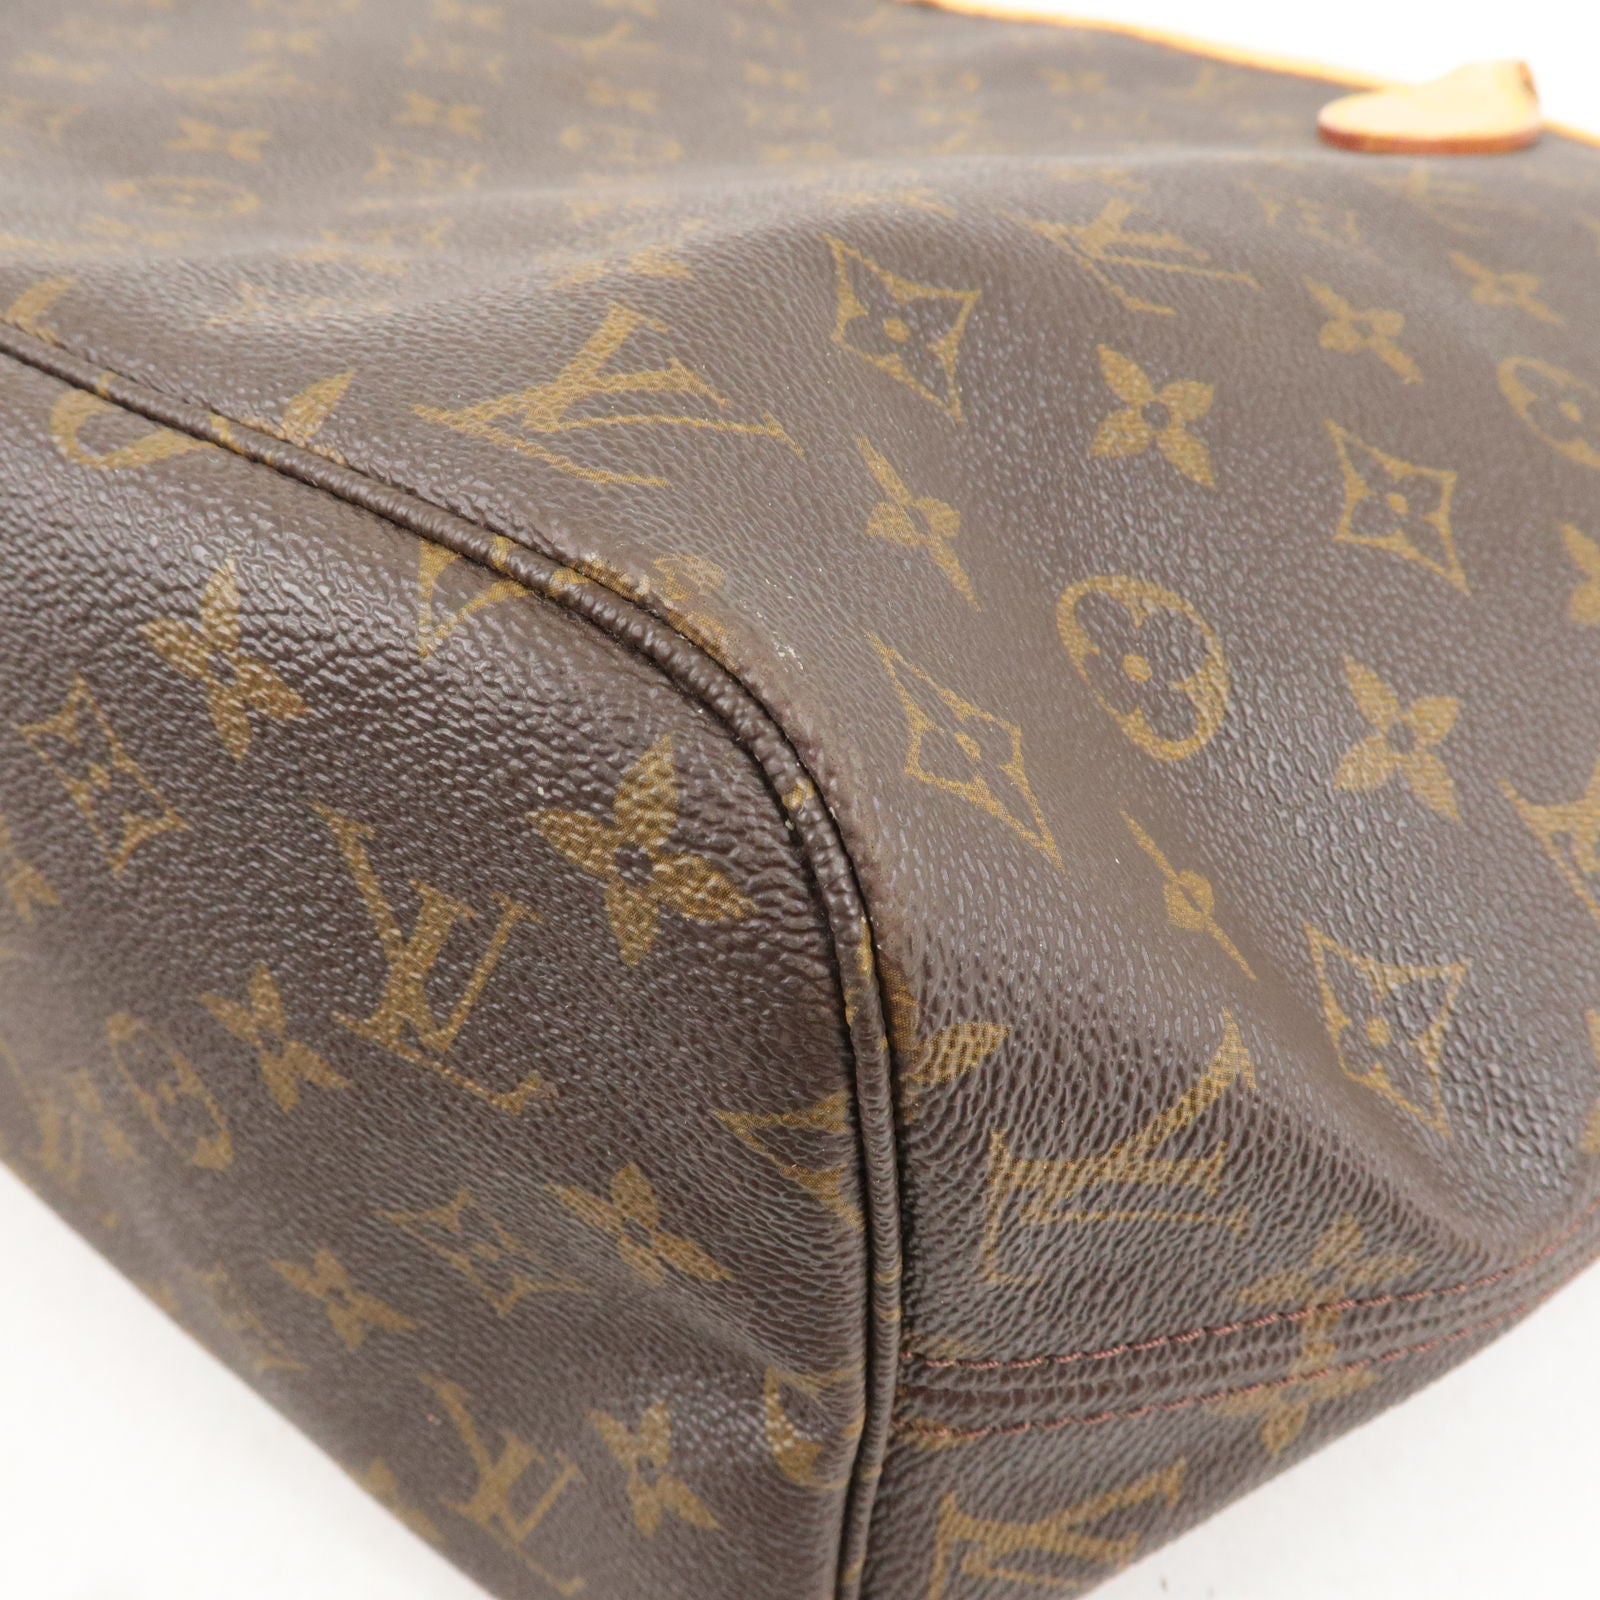 Louis Vuitton Monogram Neverfull MM M40156 Tote Bag Canvas Brown